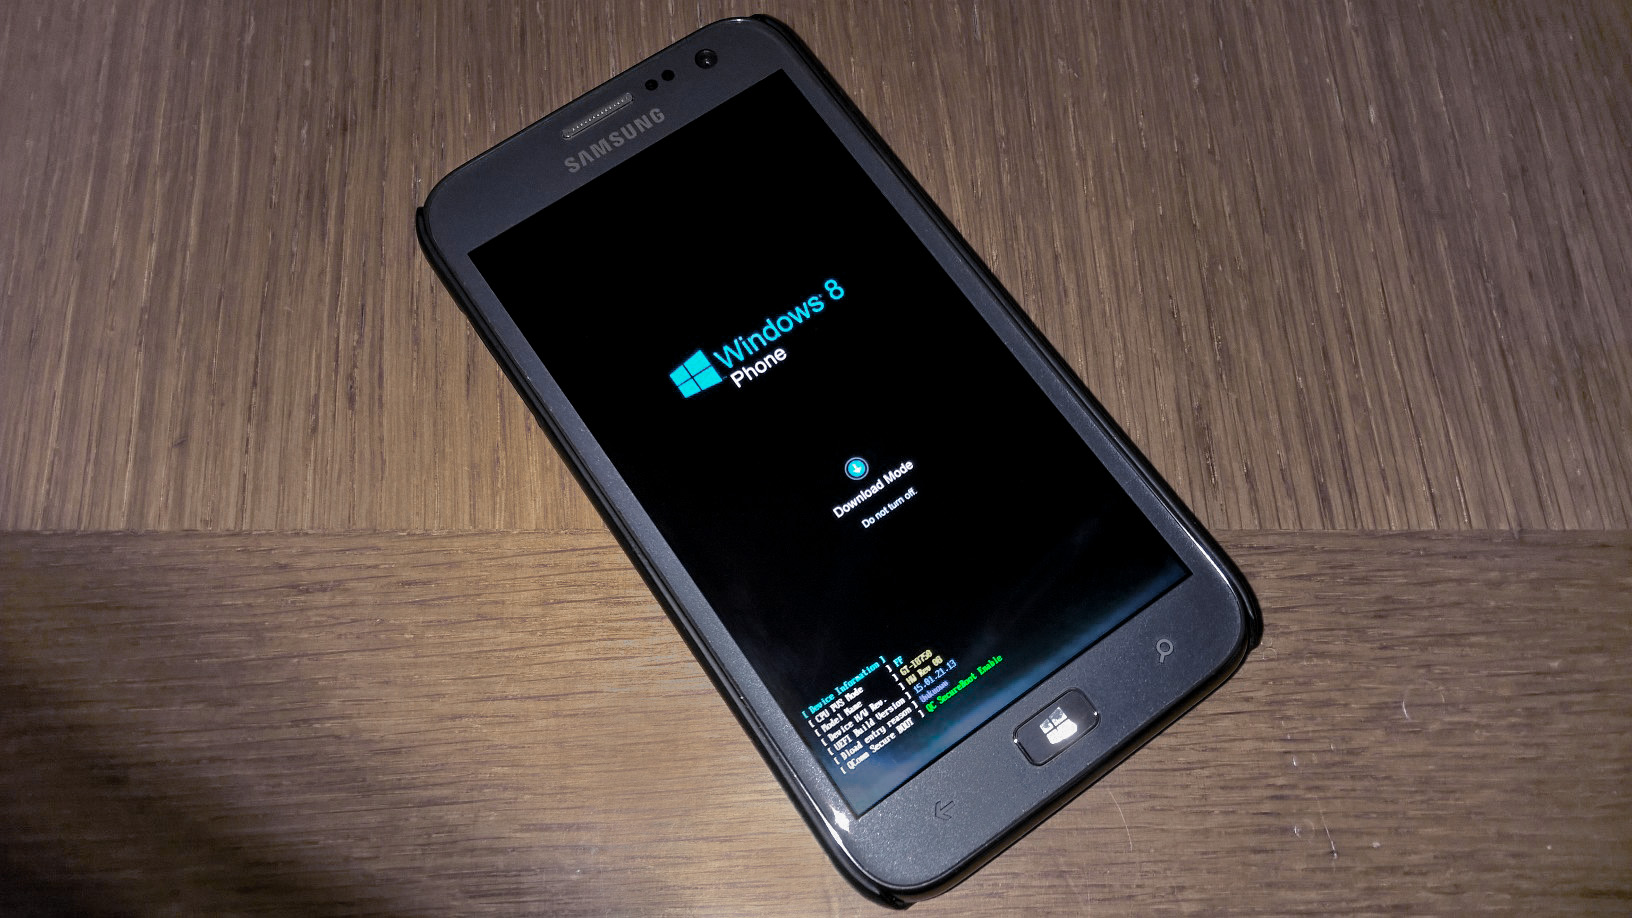 Flash Samsung Ativ S Windows Phone 8.1 ROM